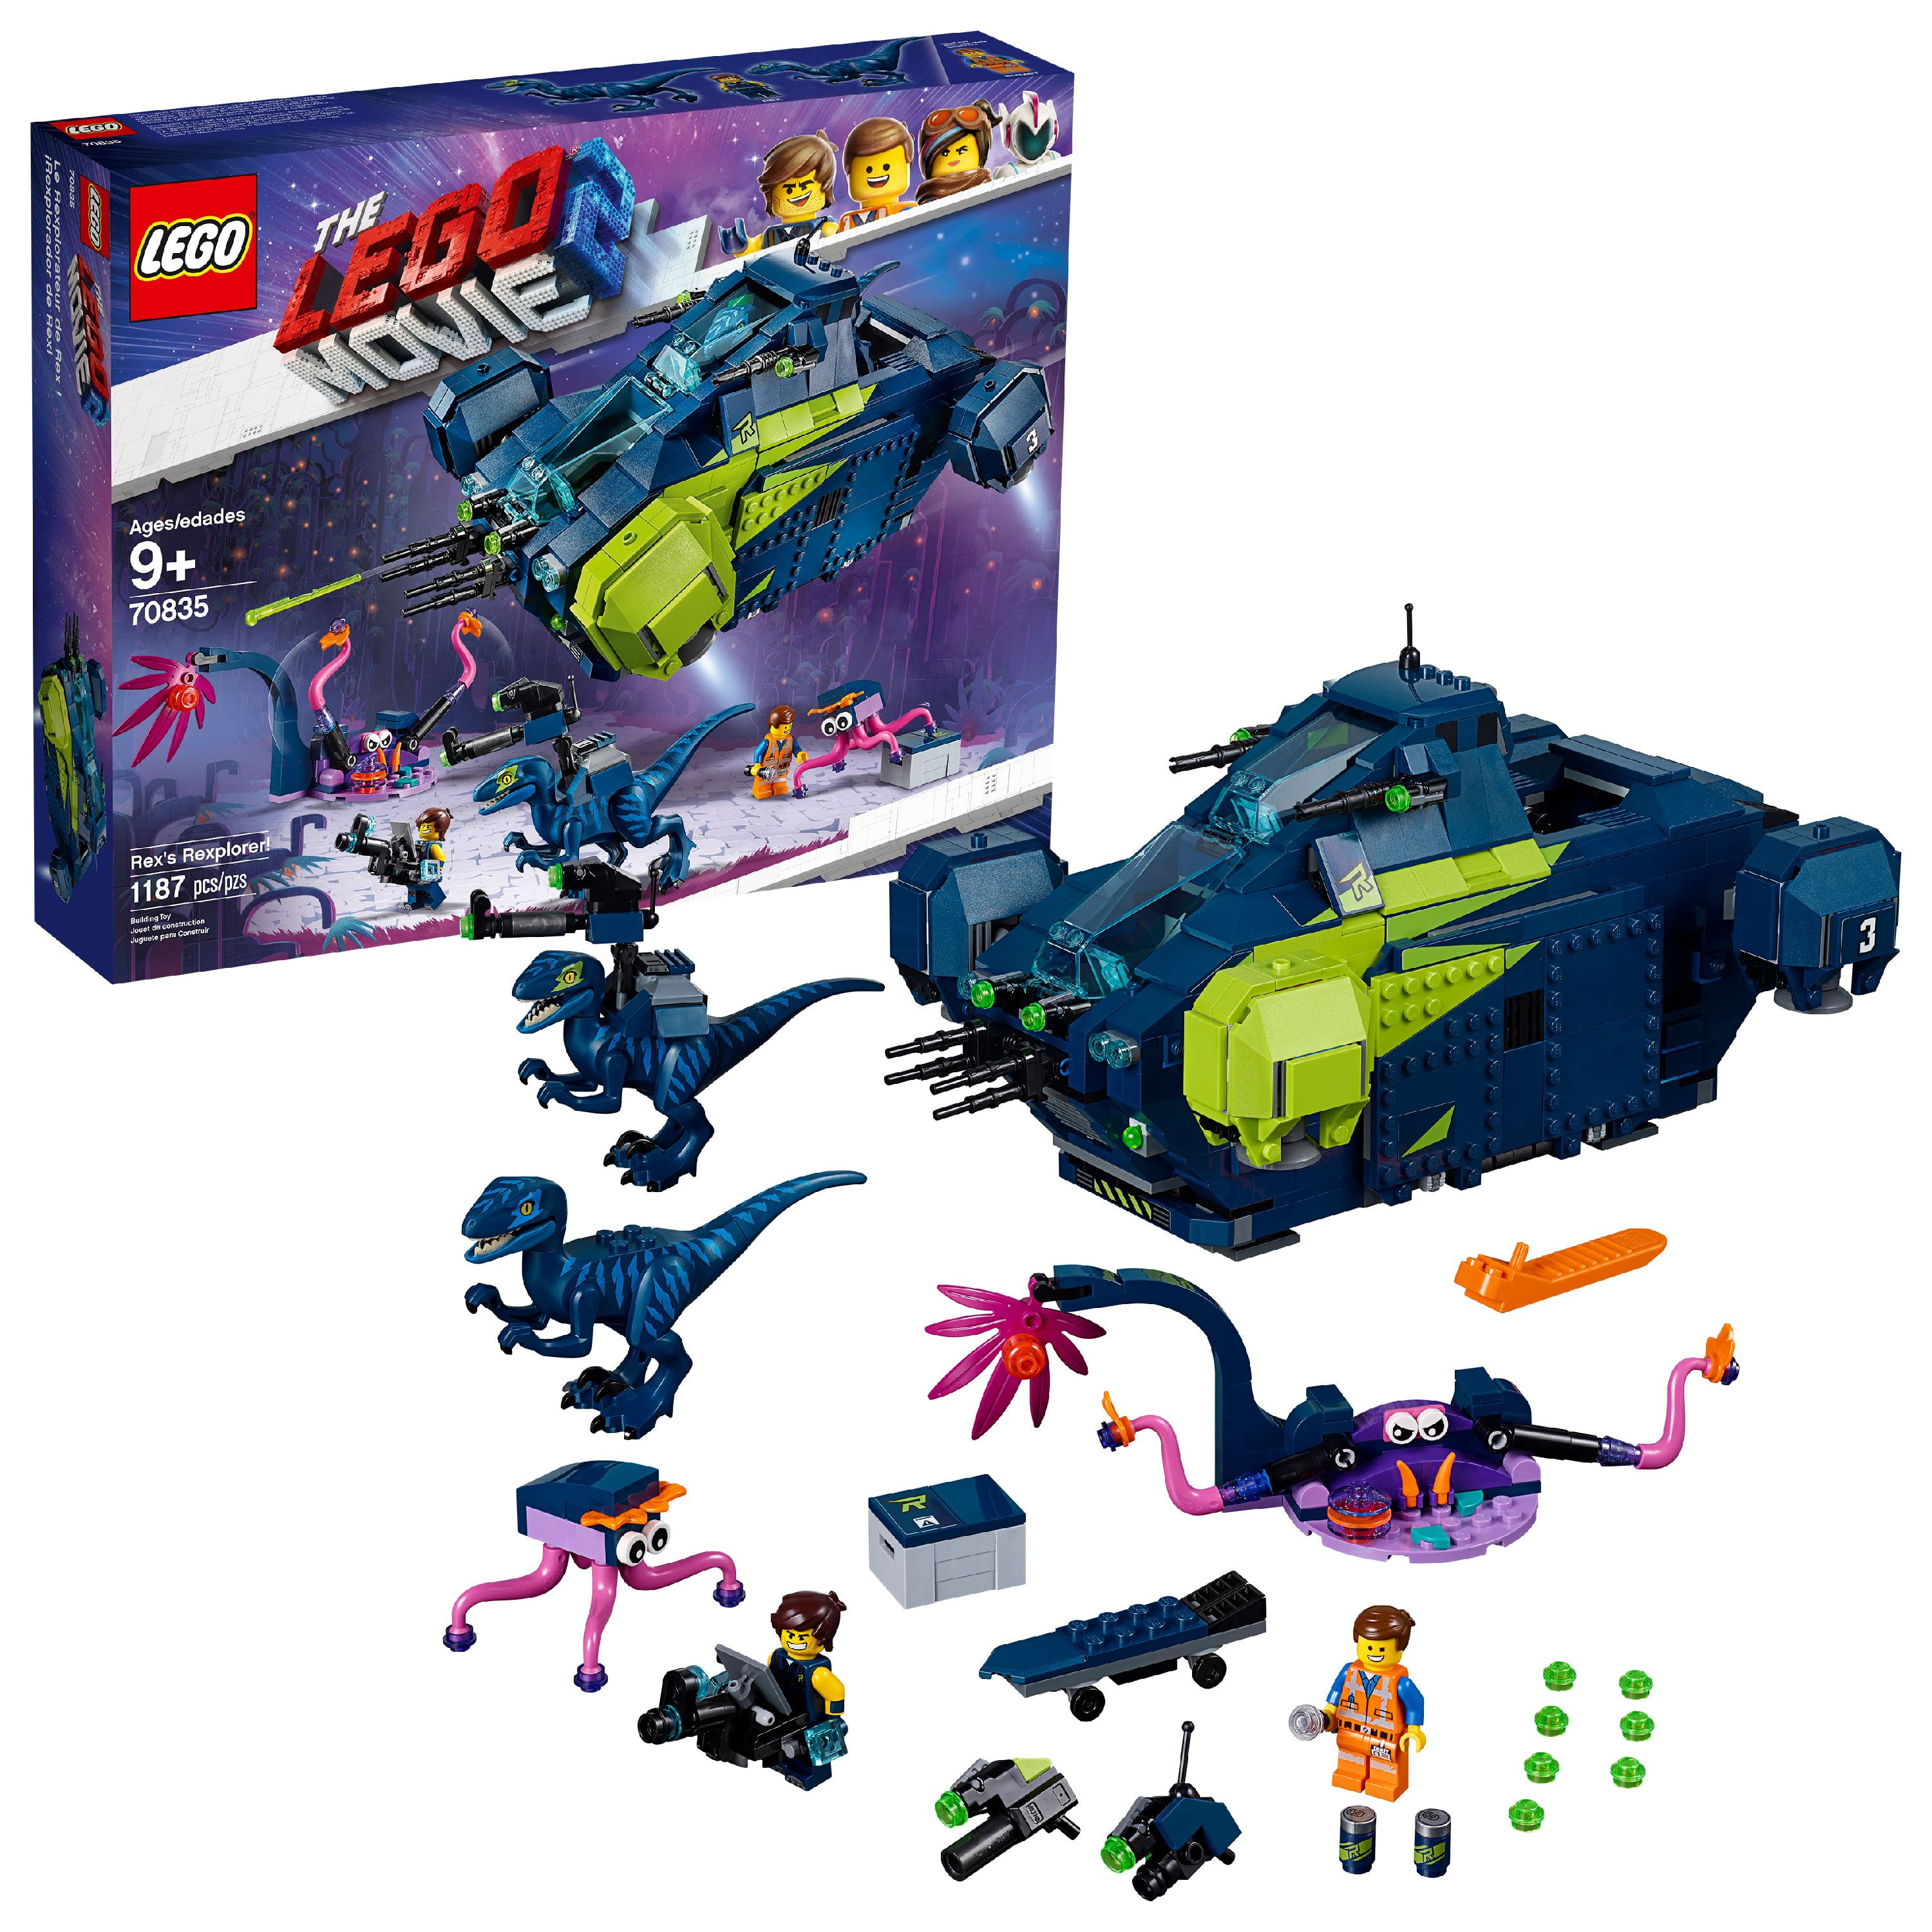 LEGO Rex's Rexplorer! 70835 - Walmart.com